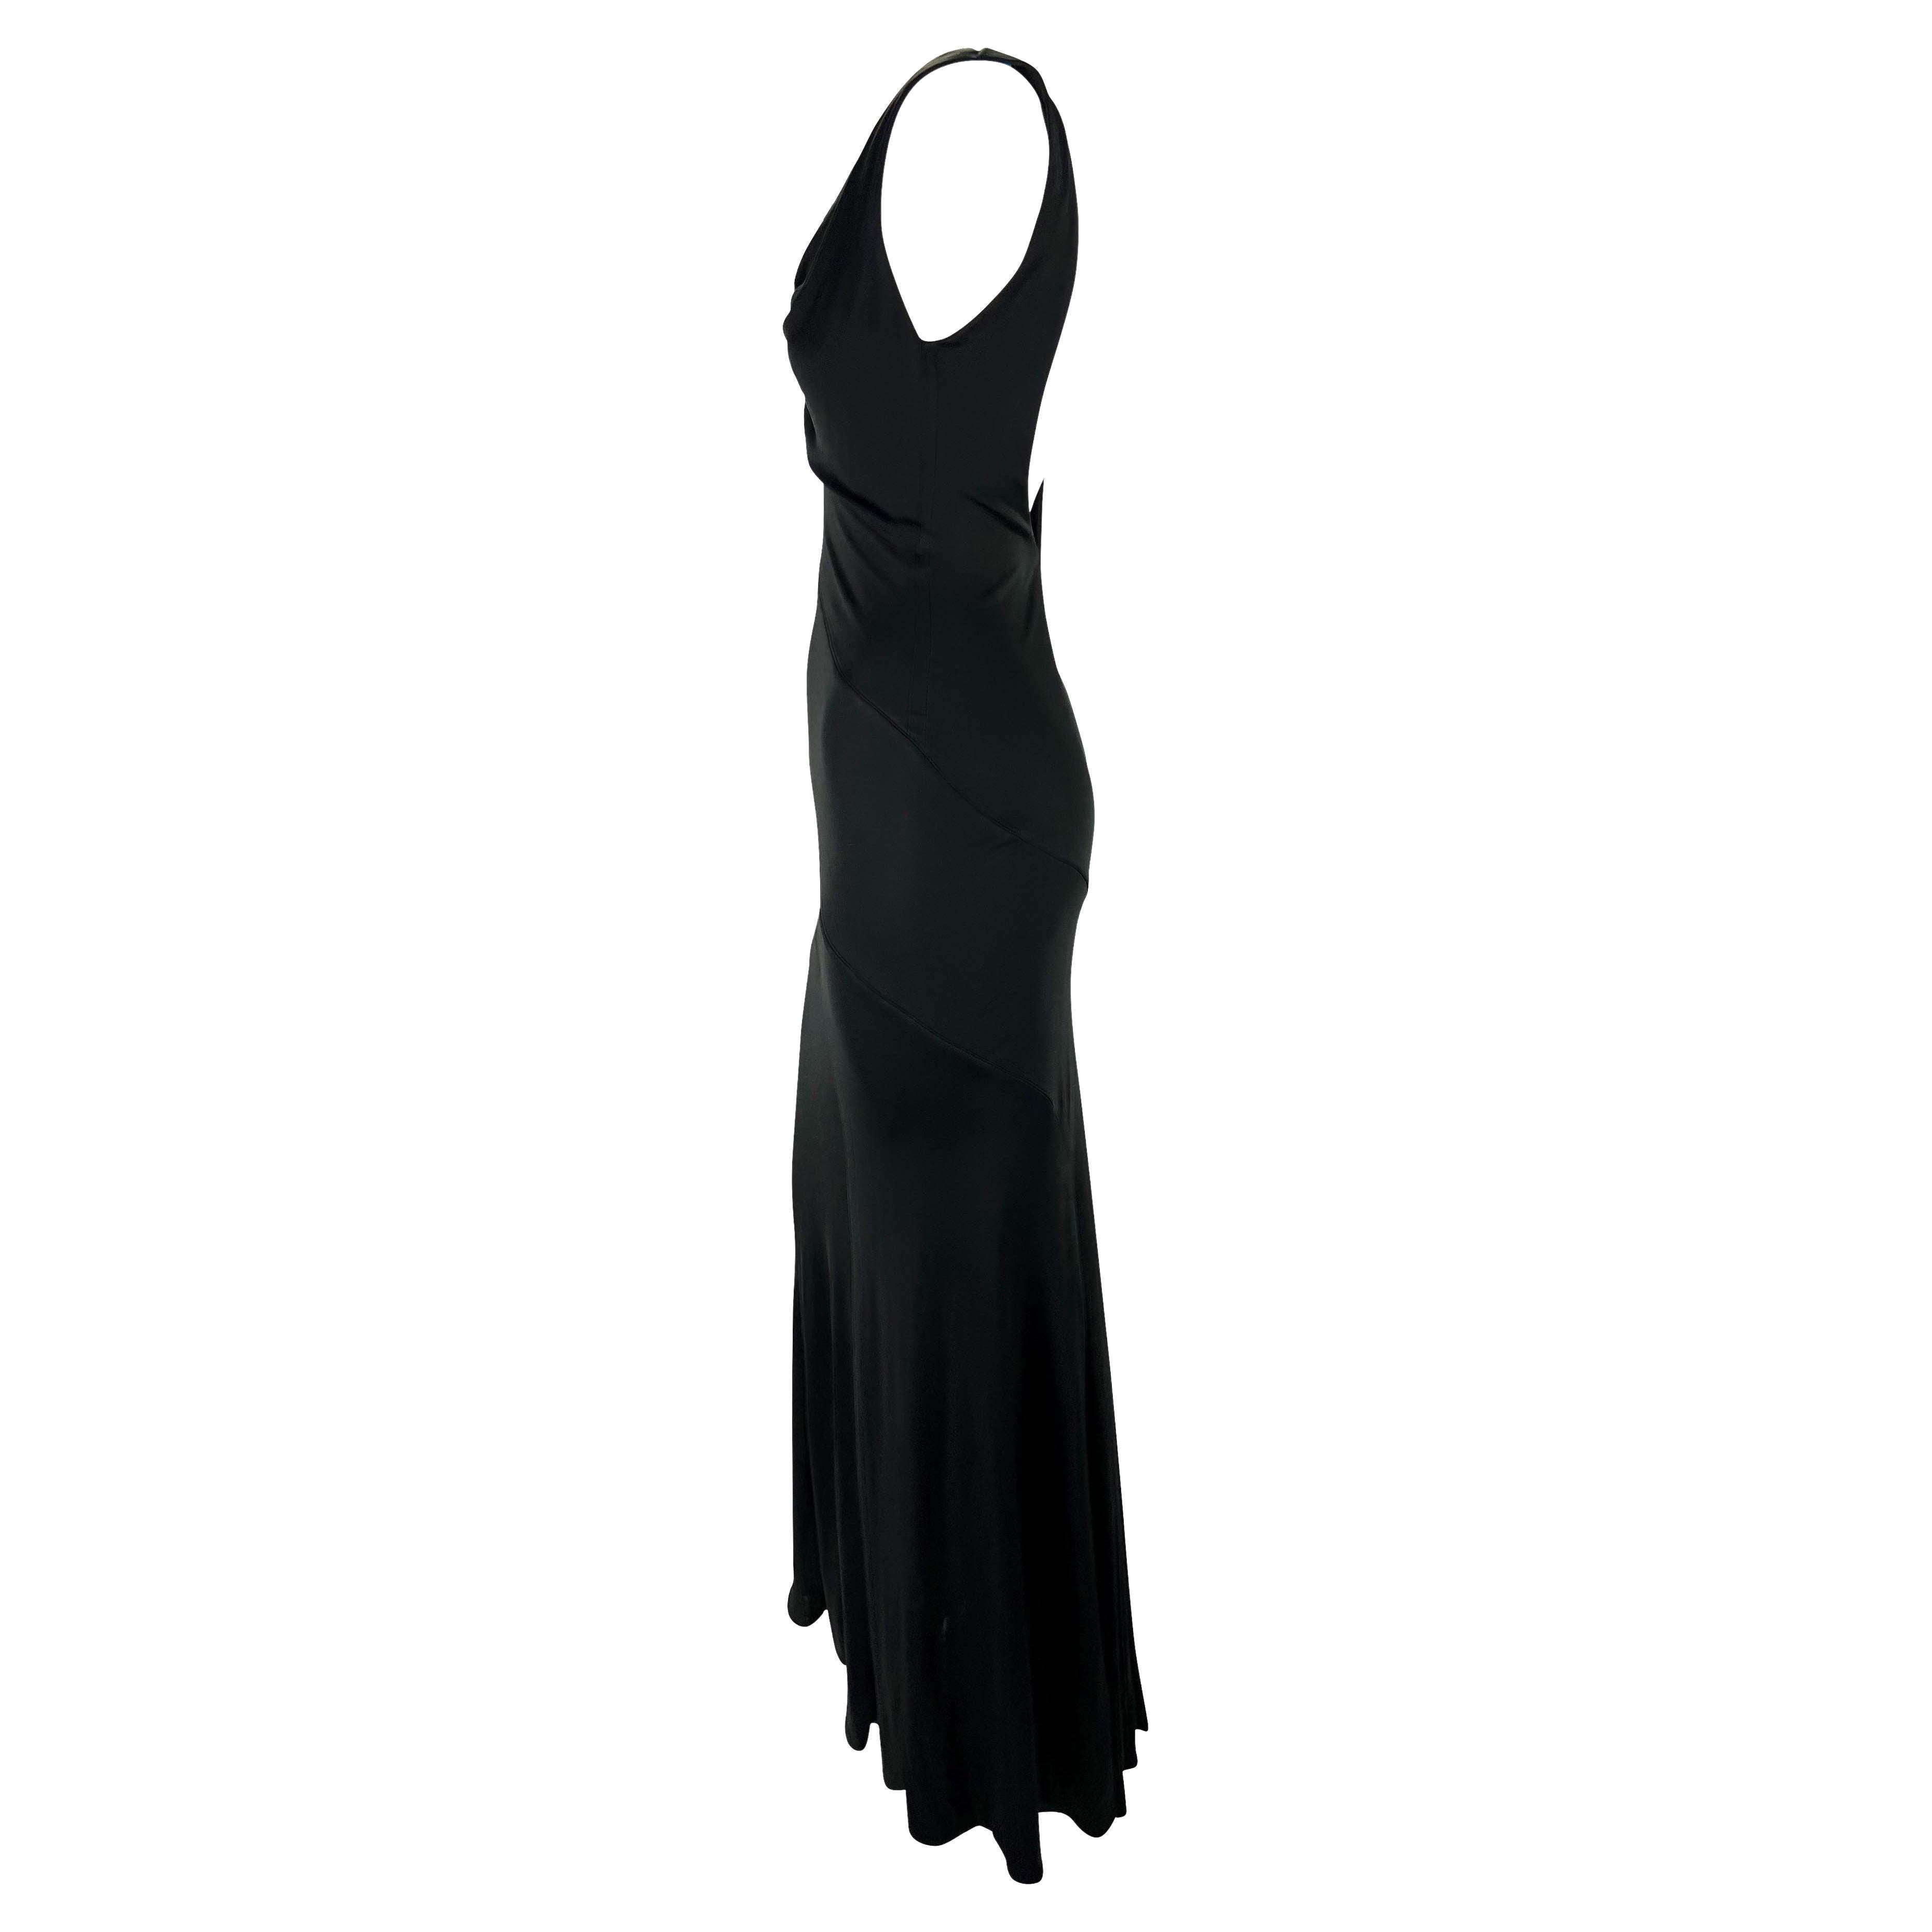 donatella versace black dress